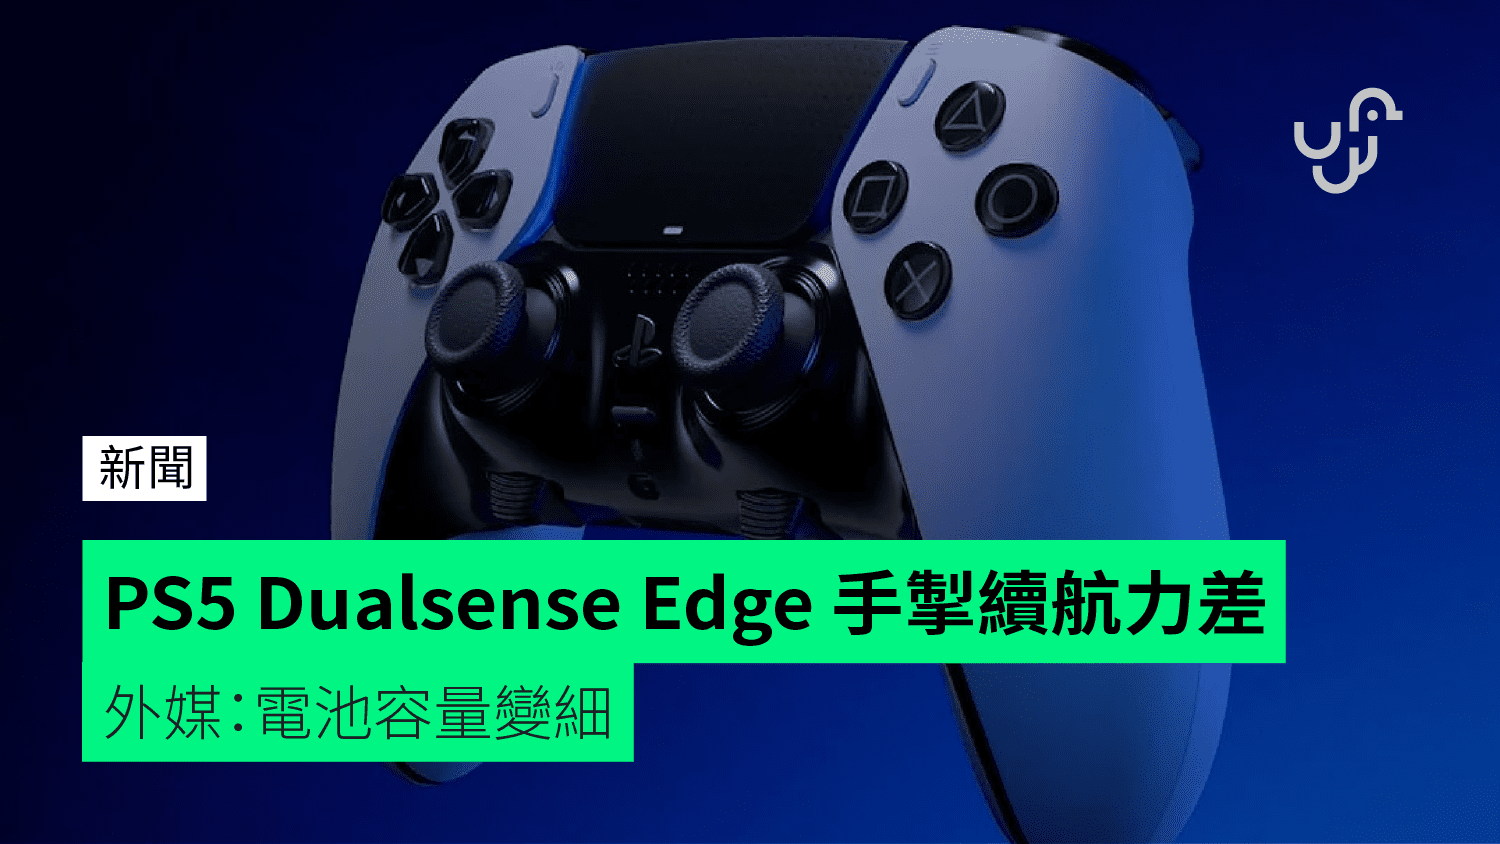 PS5 Dualsense Edge handle poor battery life foreign media: battery